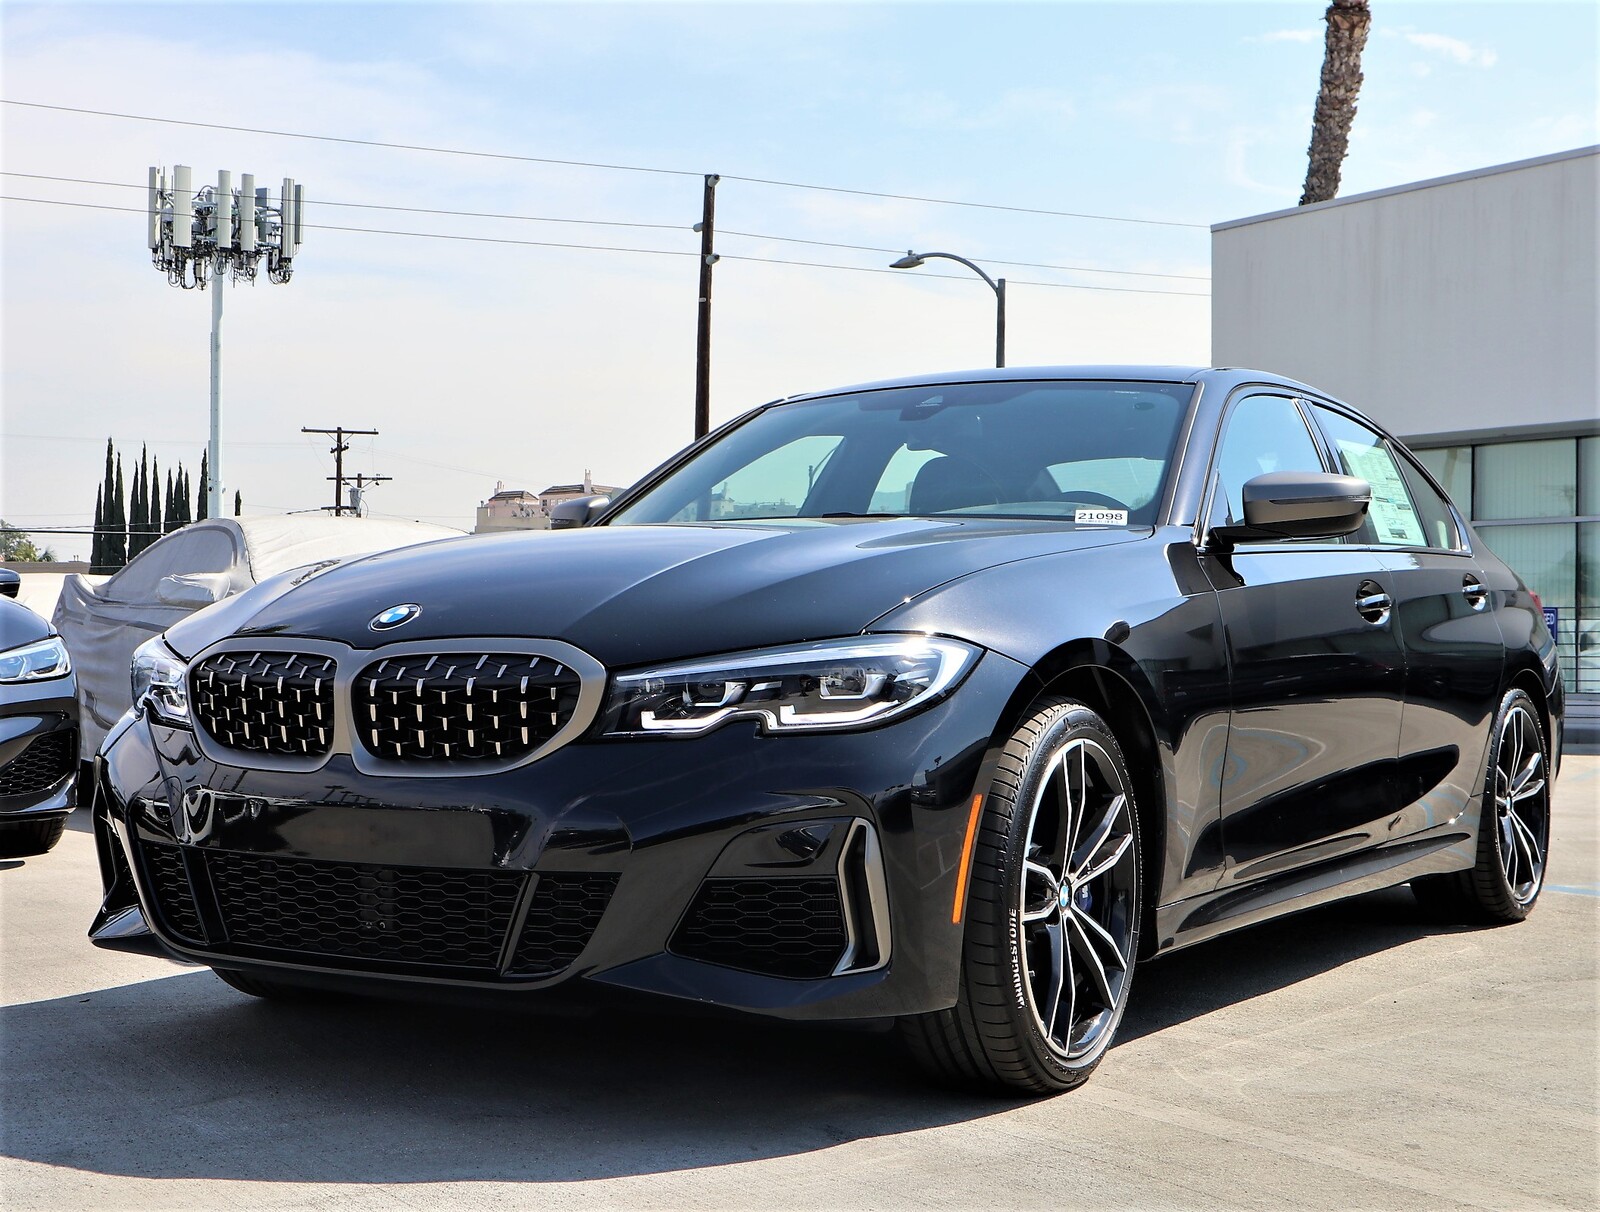 New 2021 BMW 3 Series M340i Sedan in North Hollywood #21098 | Century